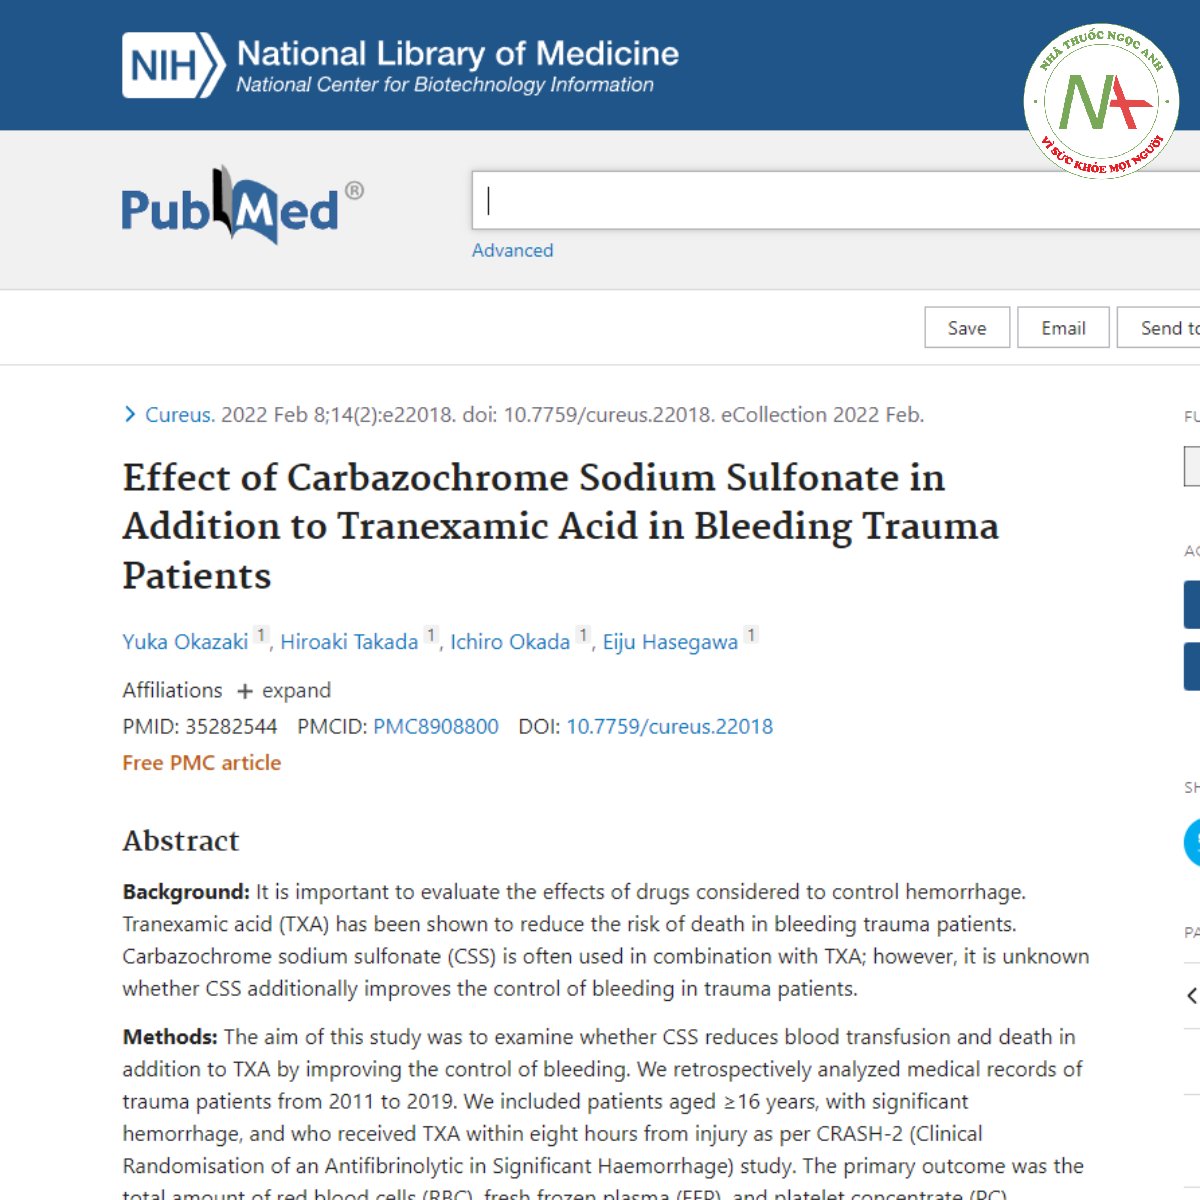 Effect of Carbazochrome Sodium Sulfonate in Addition to Tranexamic Acid in Bleeding Trauma Patients